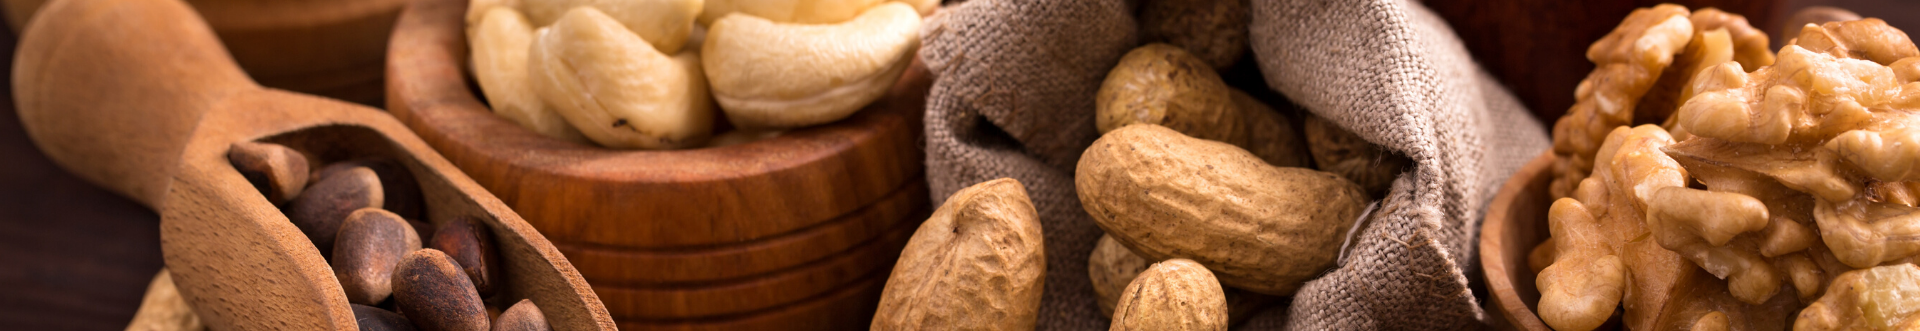 Tree nut allergies could lead to vitamin deficiencies!